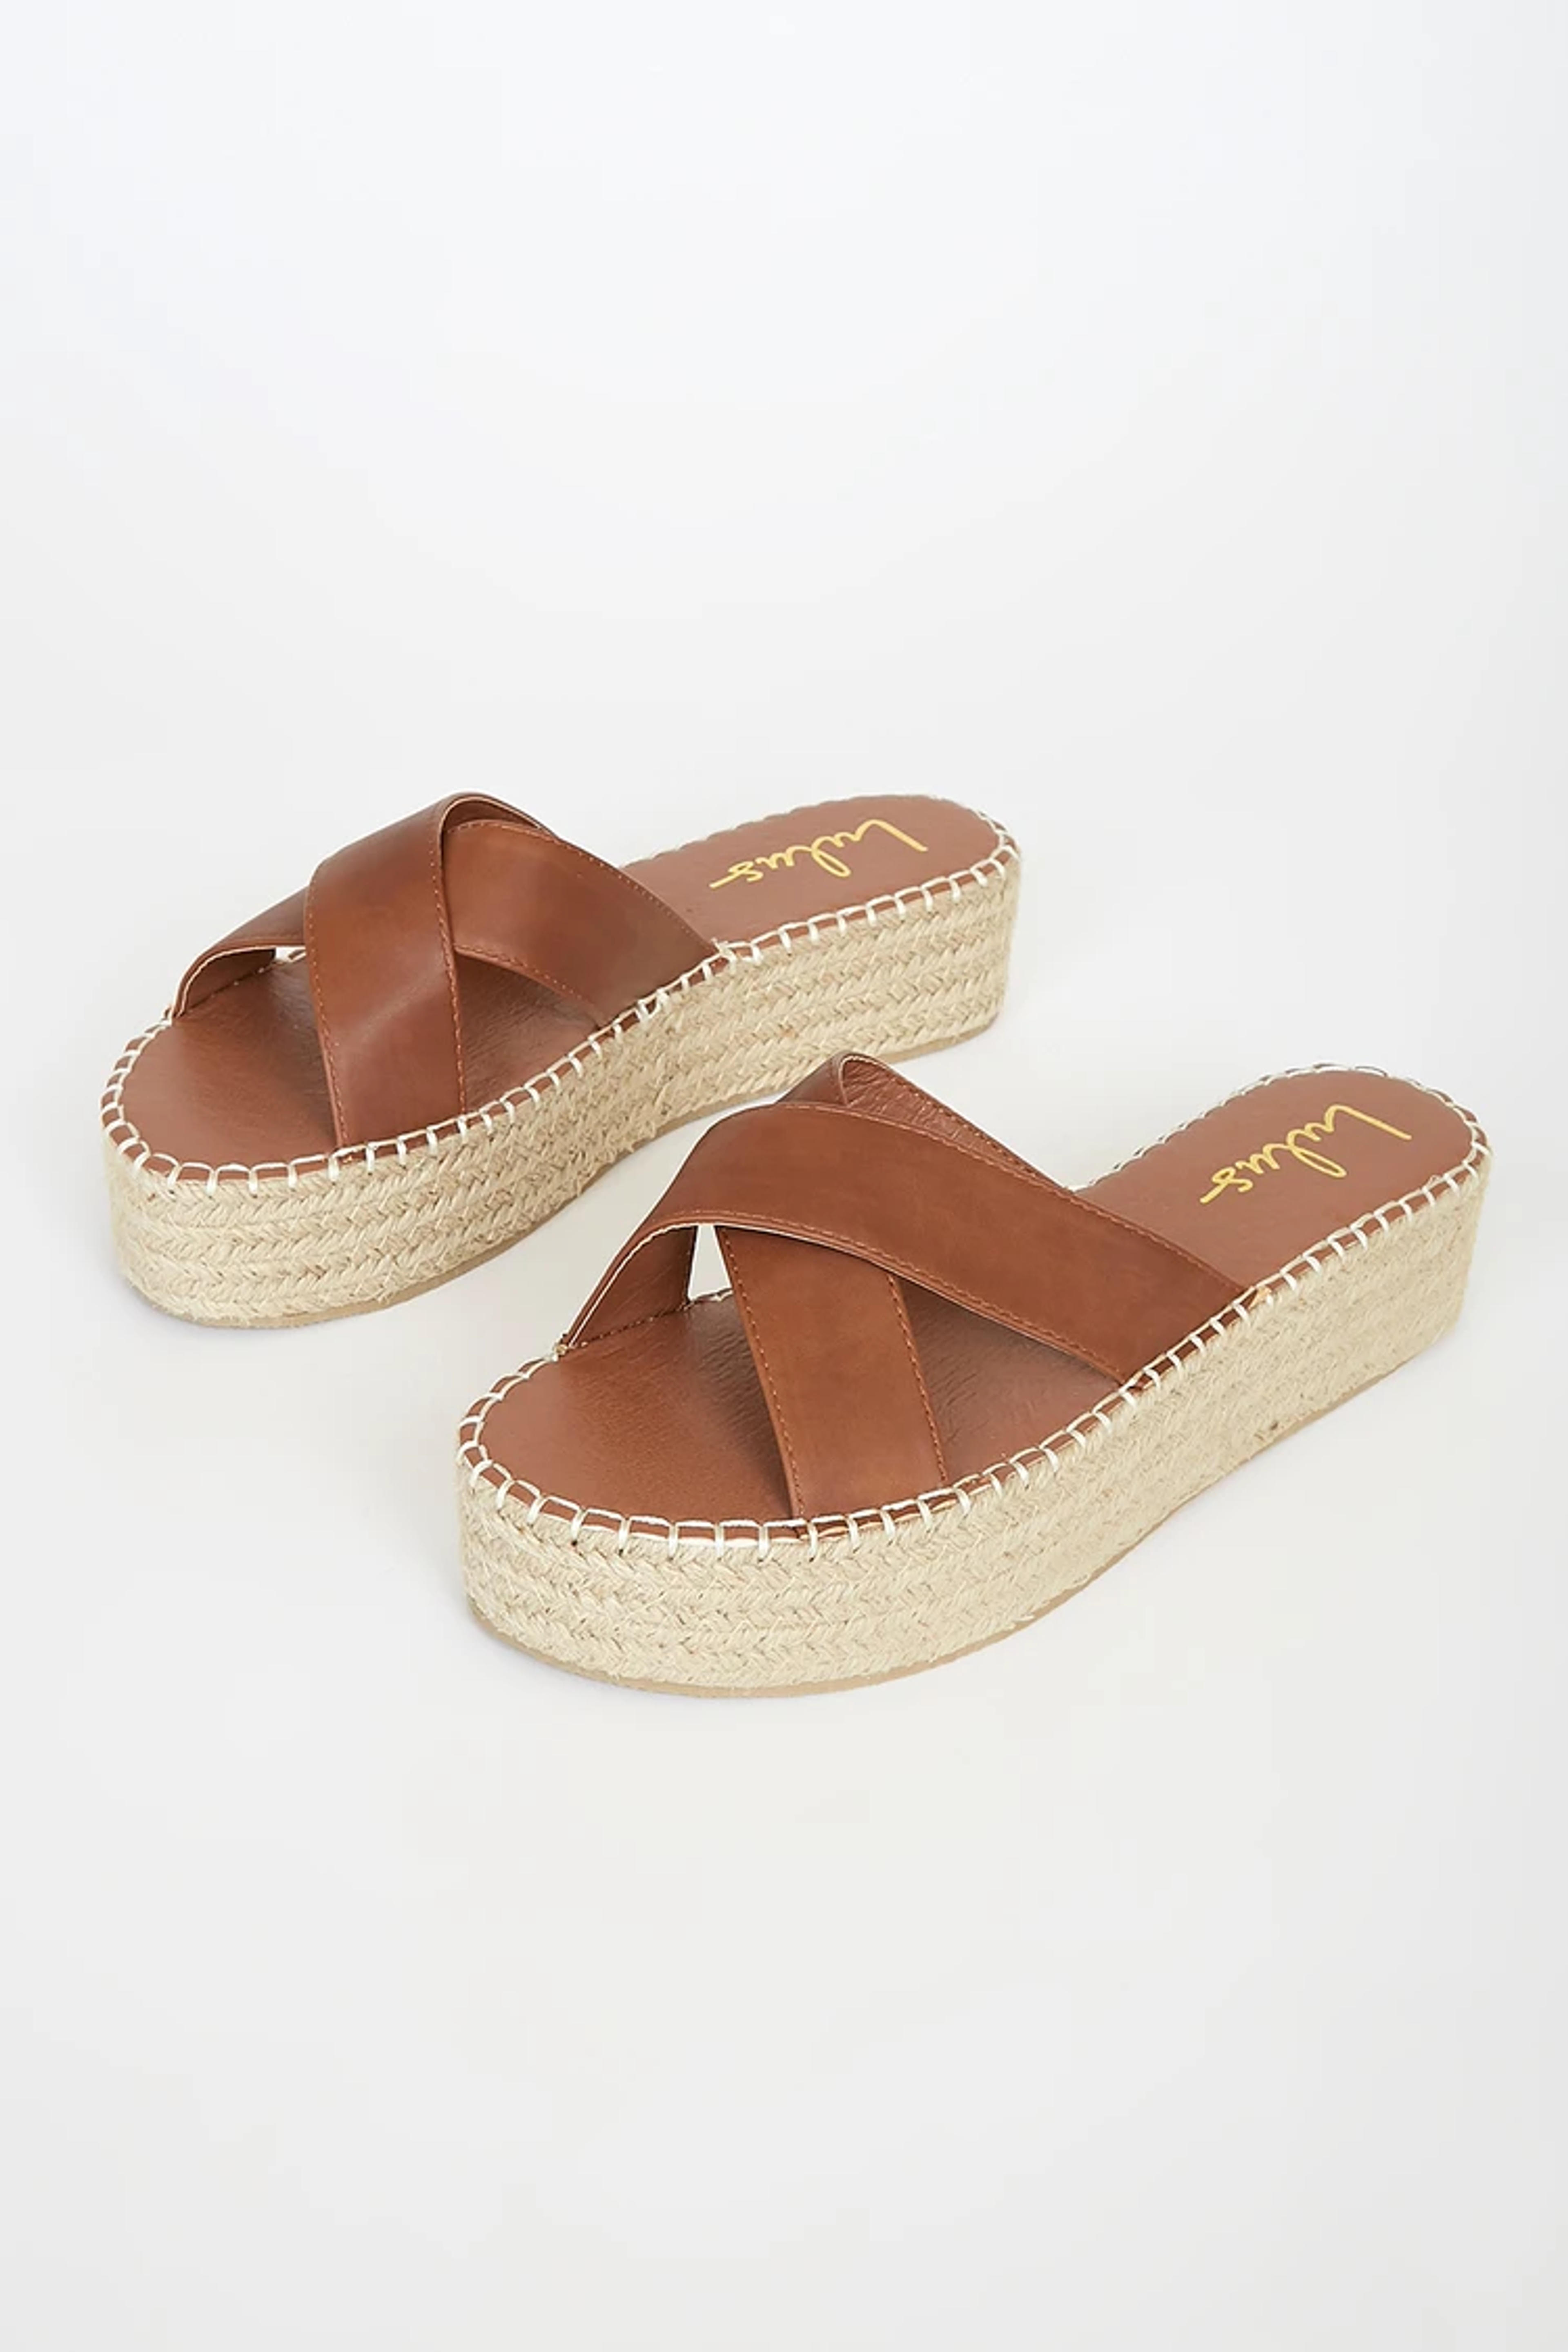 Tan Sandals - Cute Espadrille Sandals - Flatform Sandals - Lulus